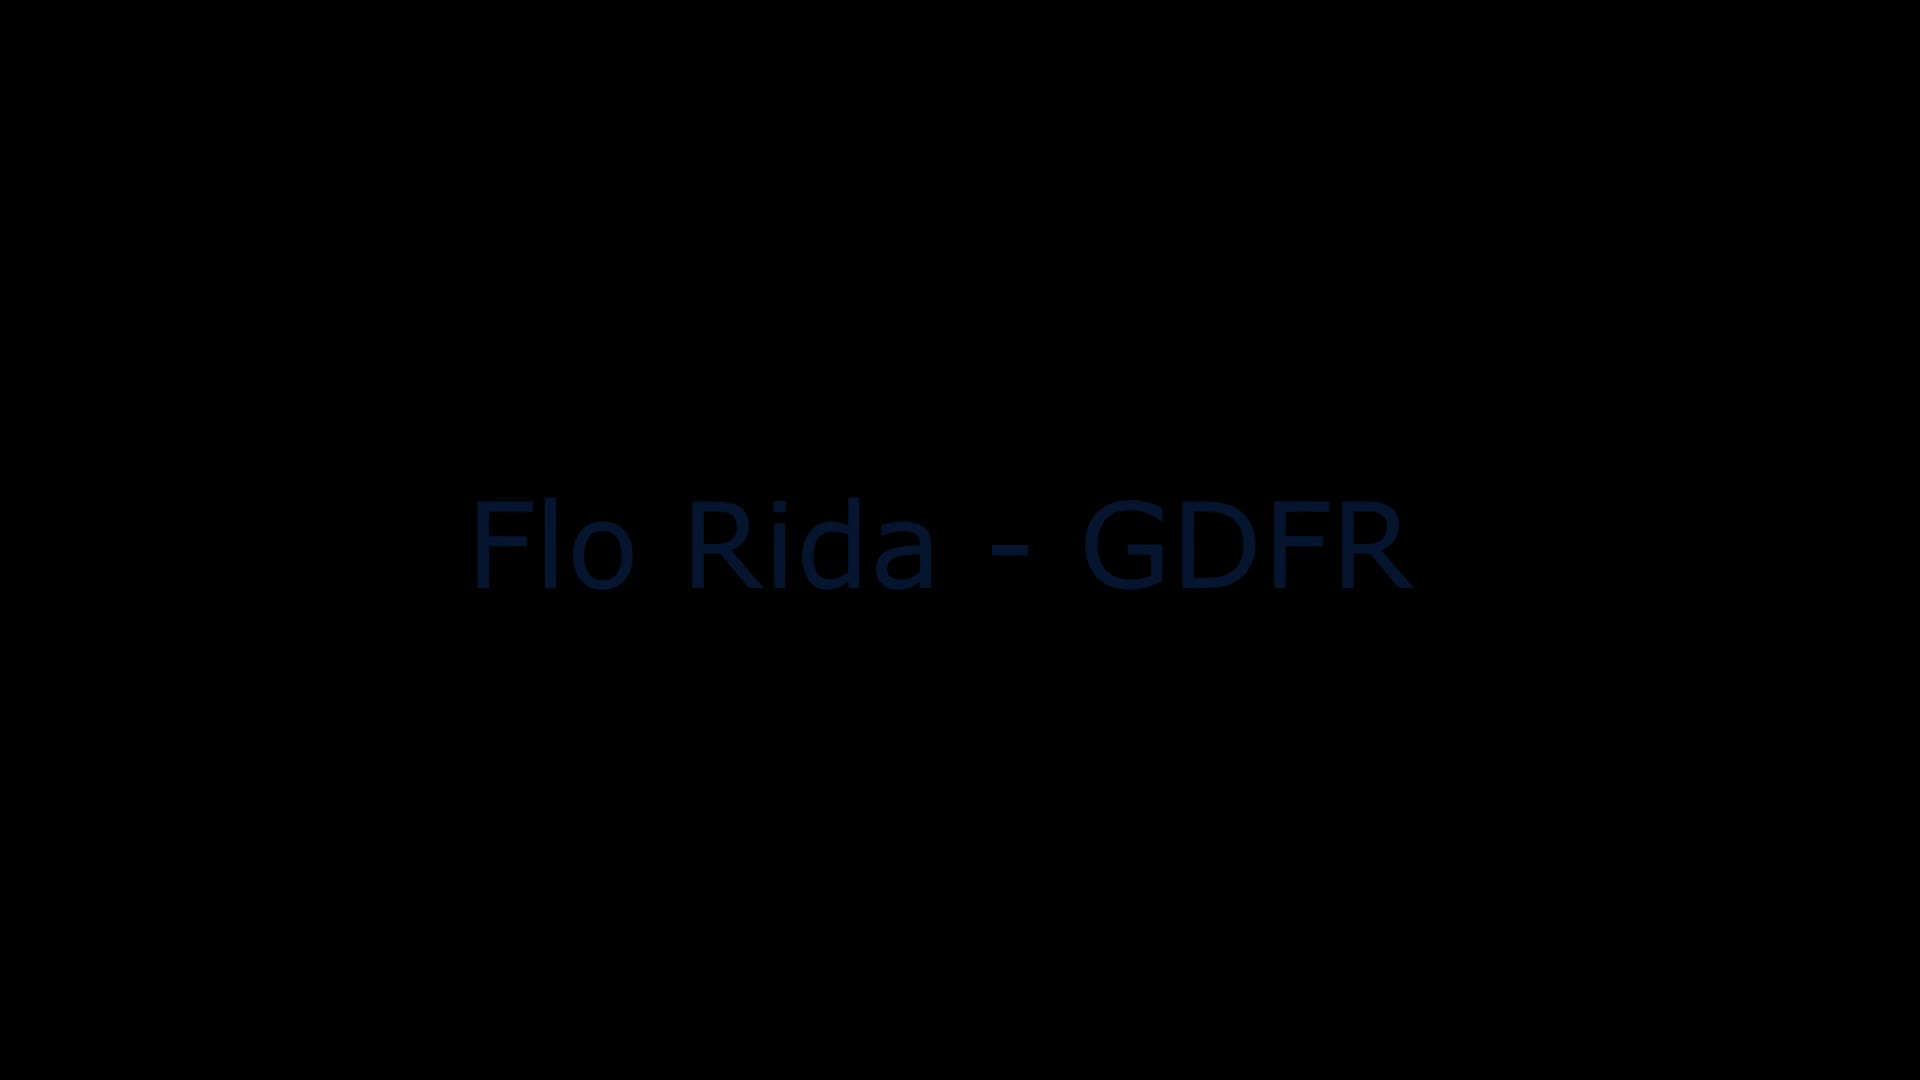 Flo Rida – GDFR Waveya Halloween special perform